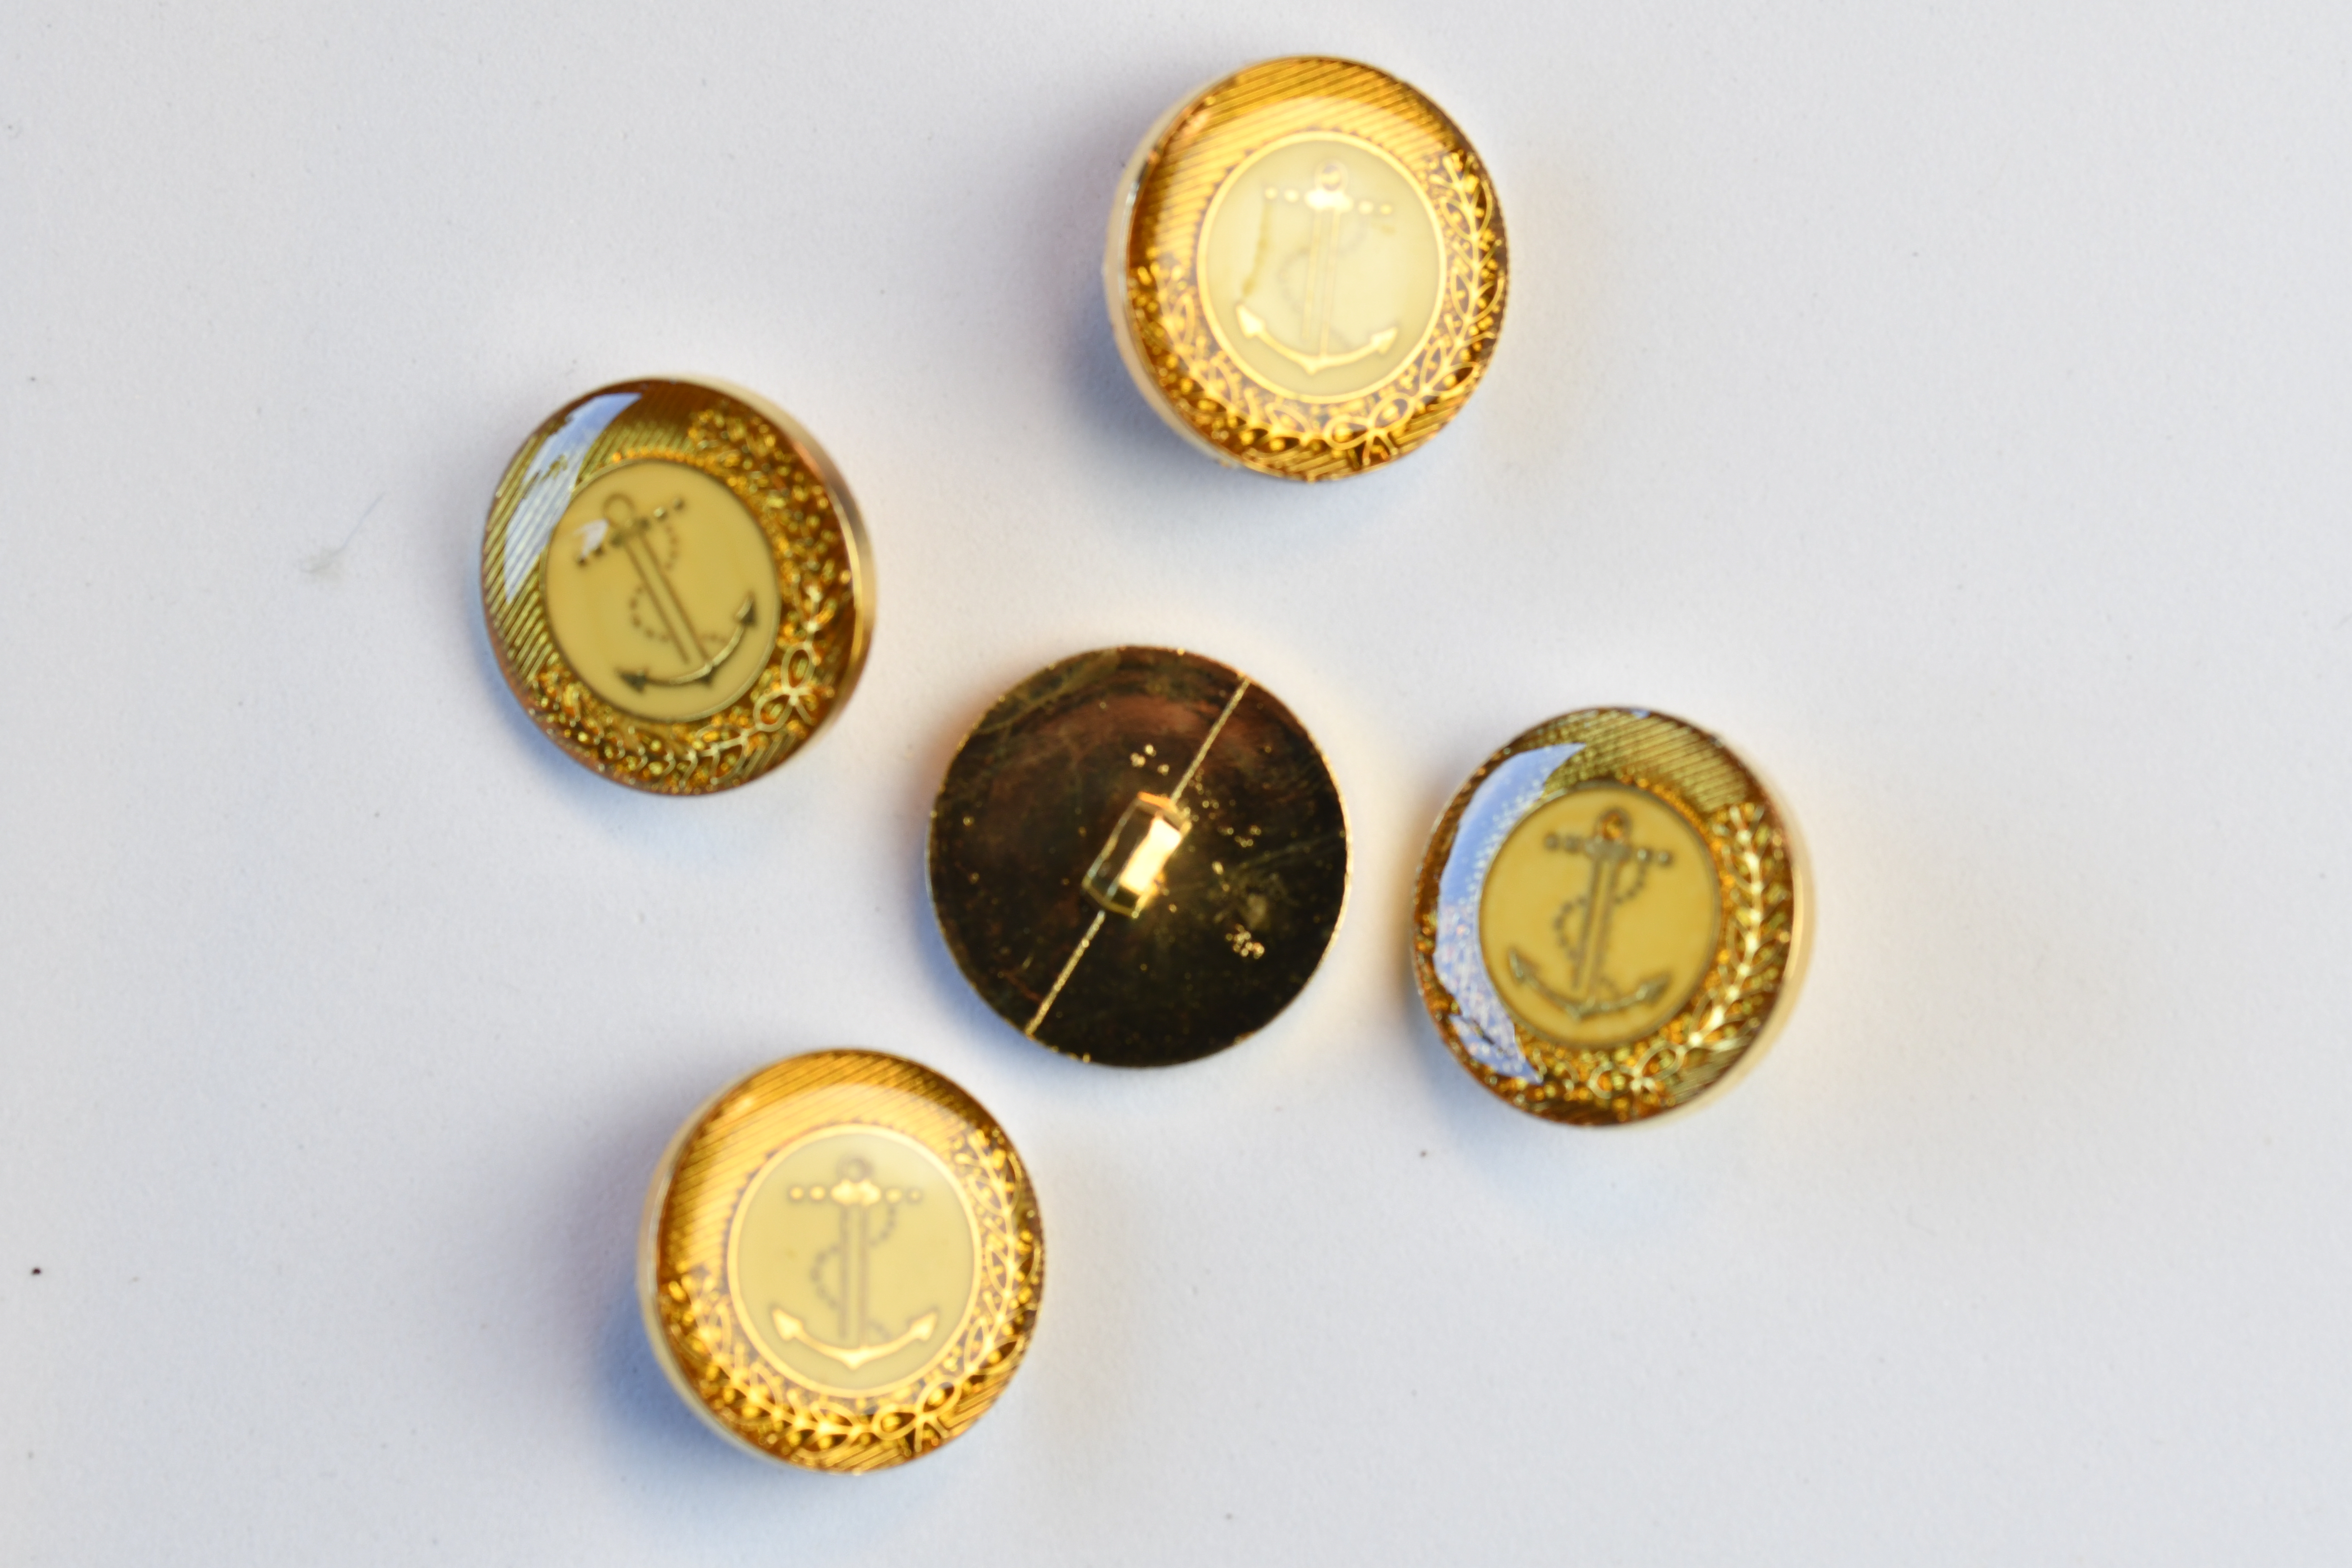 trappe Stedord Paradis Guld knap med Anker 22mm - knap gul-sølv-kobber-bronce - Tante Hanne